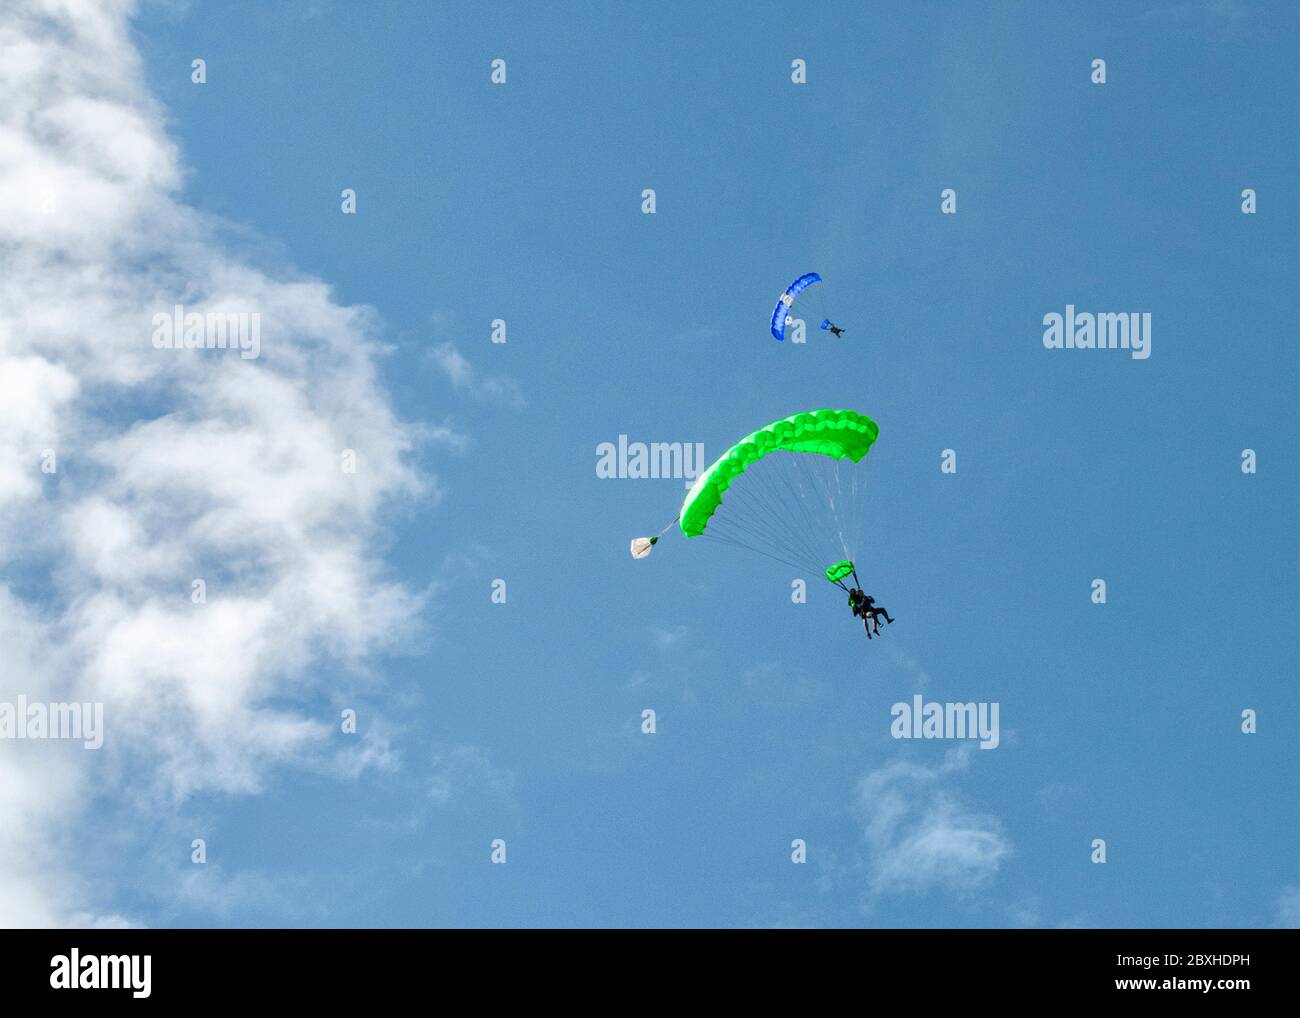 Tandem skydiving Stock Photo